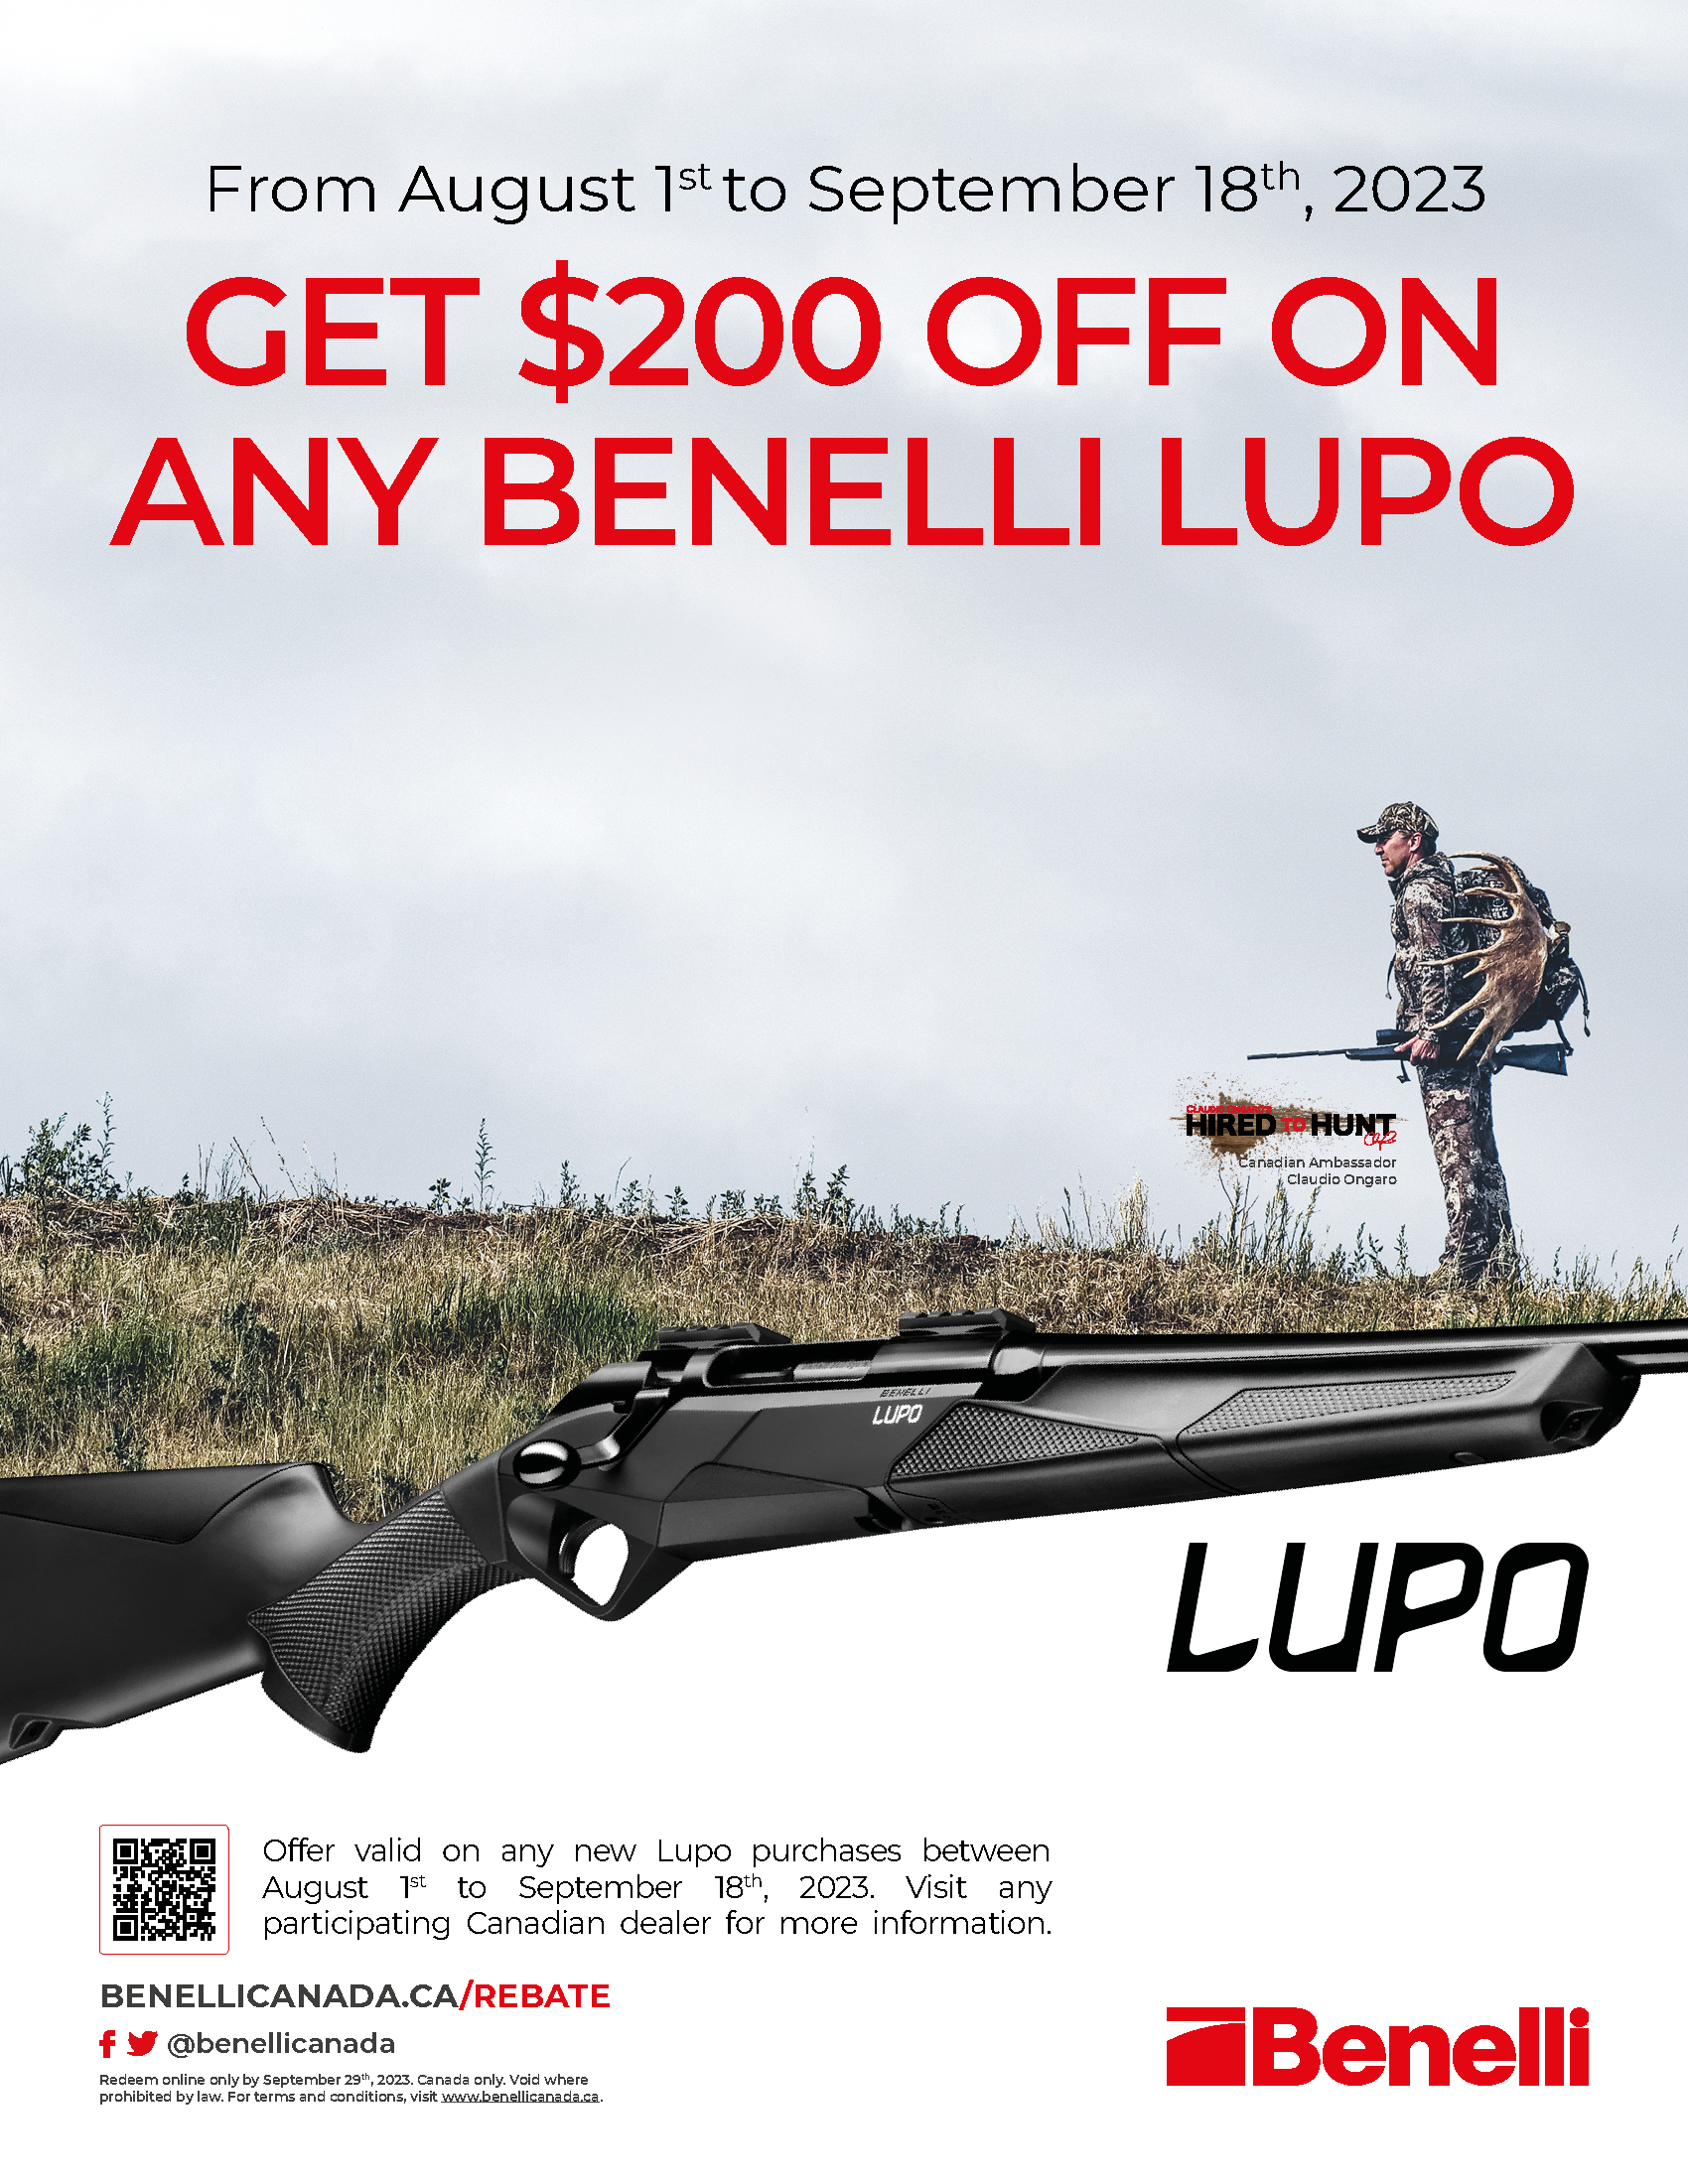 Canada Benelli Lupo 200 dollars Rebate 2023 Poster